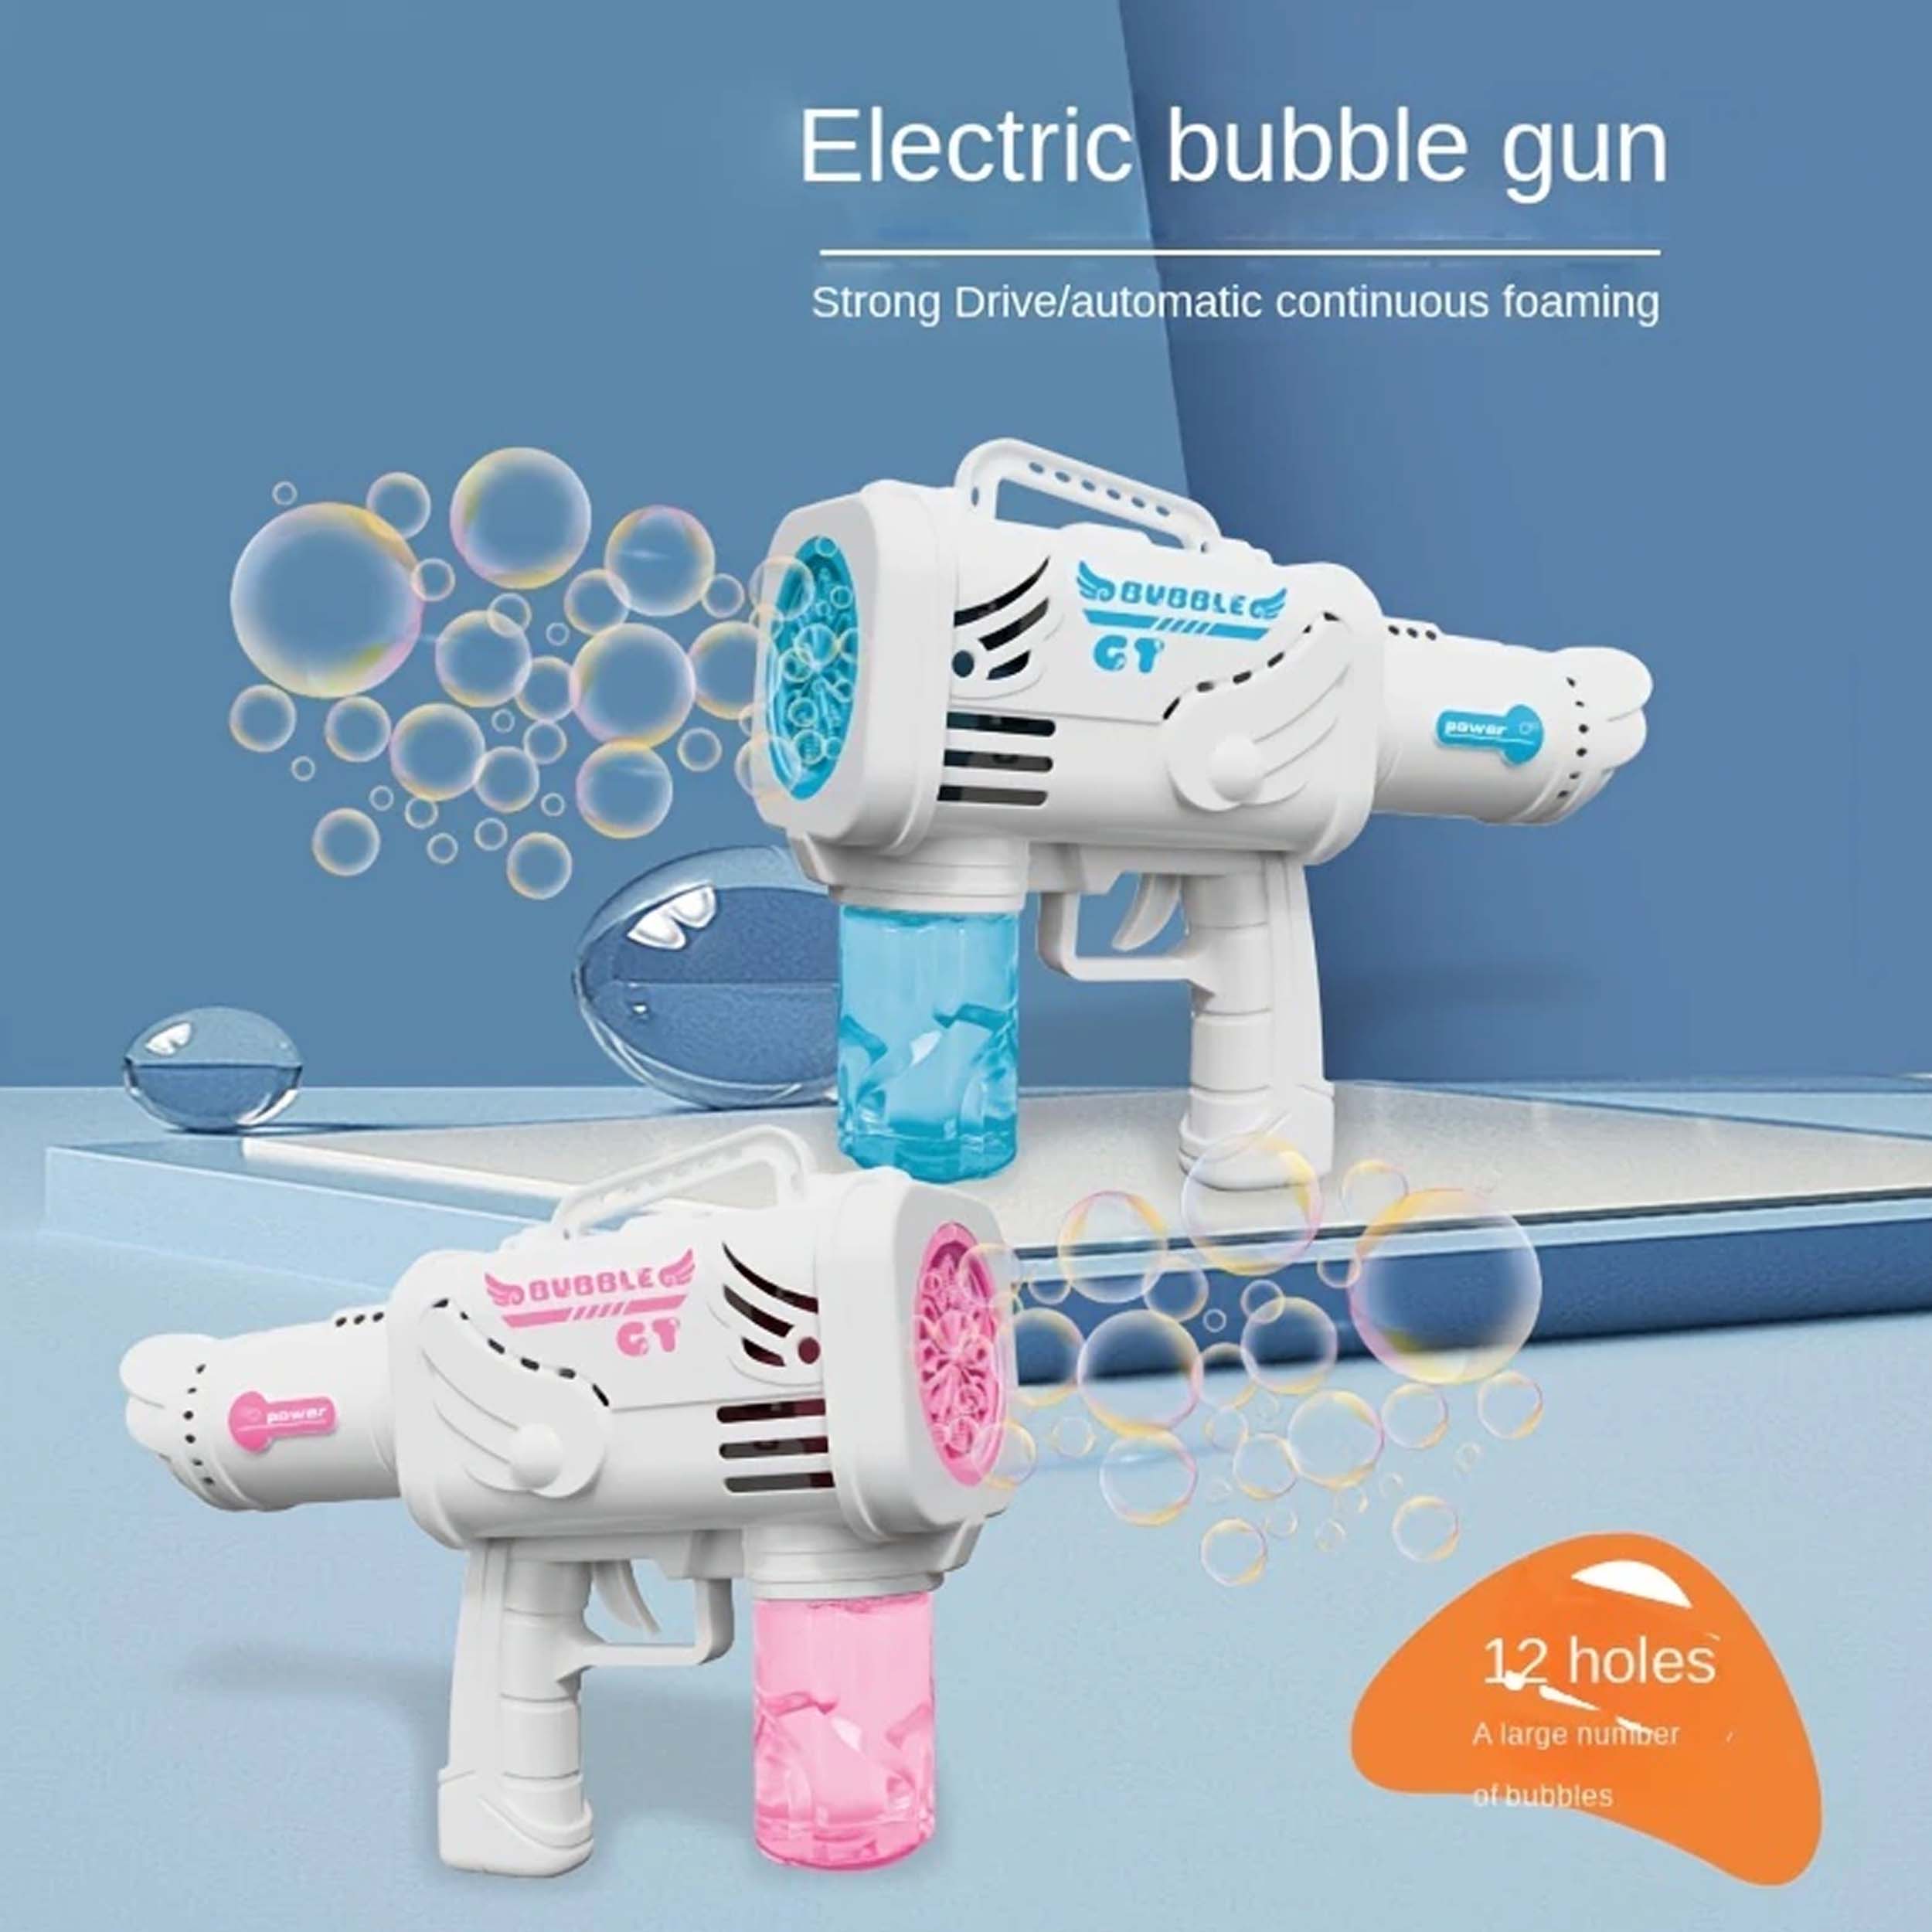 Electric Super Bubble Gun - Endless Fun for Kids & Parties